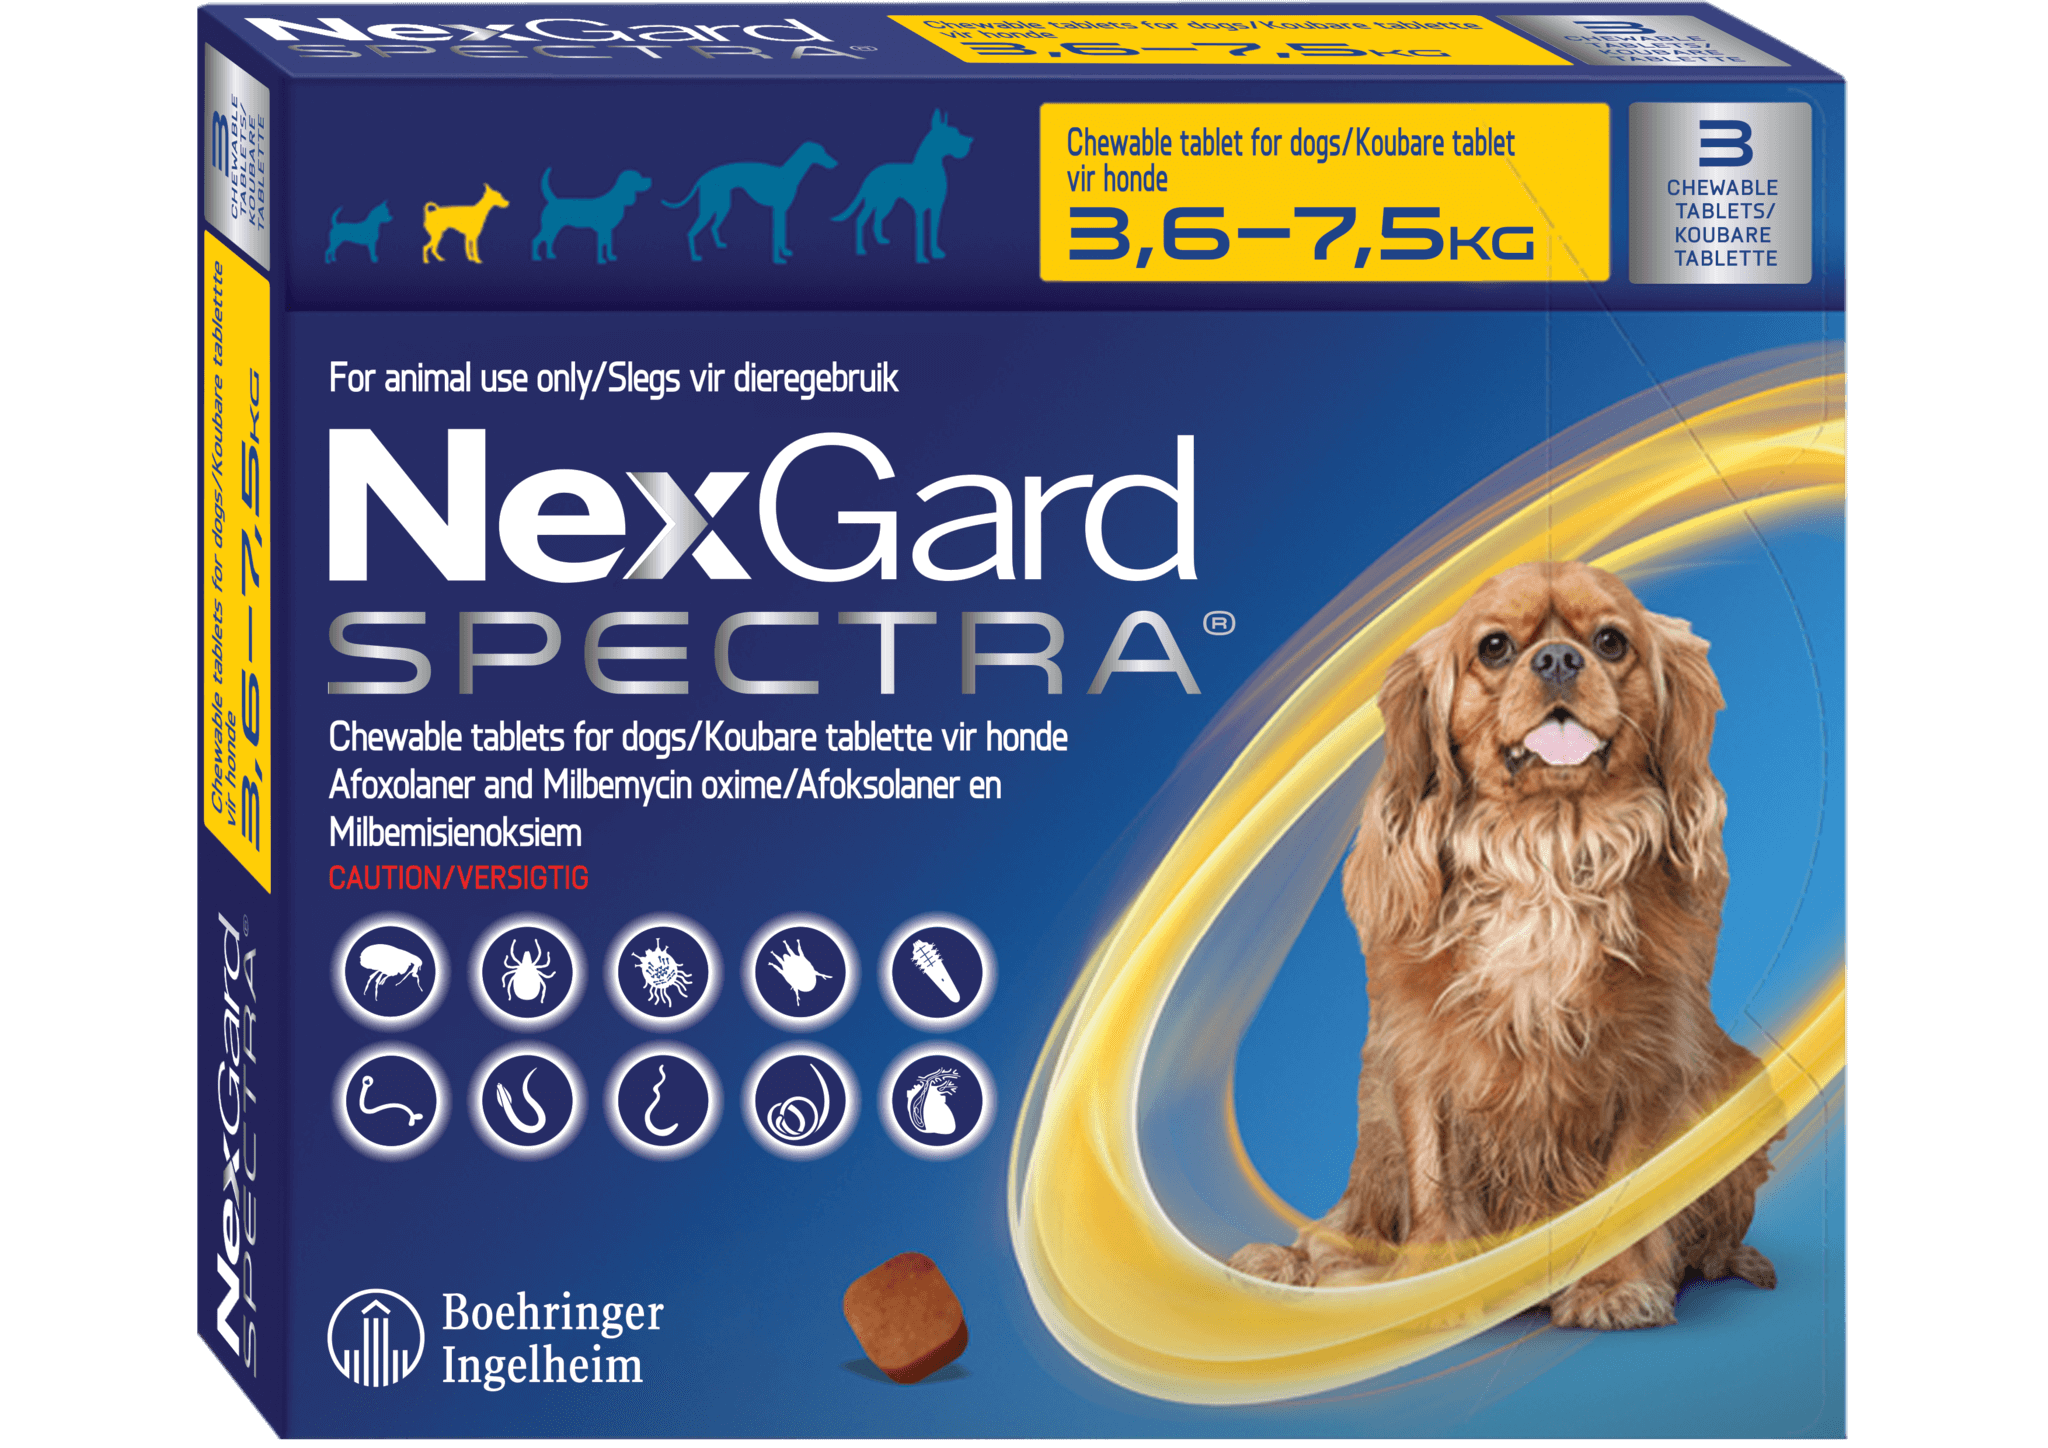 Нексгард спектра инструкция по применению. НЕКСГАРД спектра для собак 2-3.5 кг. НЕКСГАРД спектра для собак 3,5-7. НЕКСГАРД для собак 7.5. NEXGARD Spectra для собак.